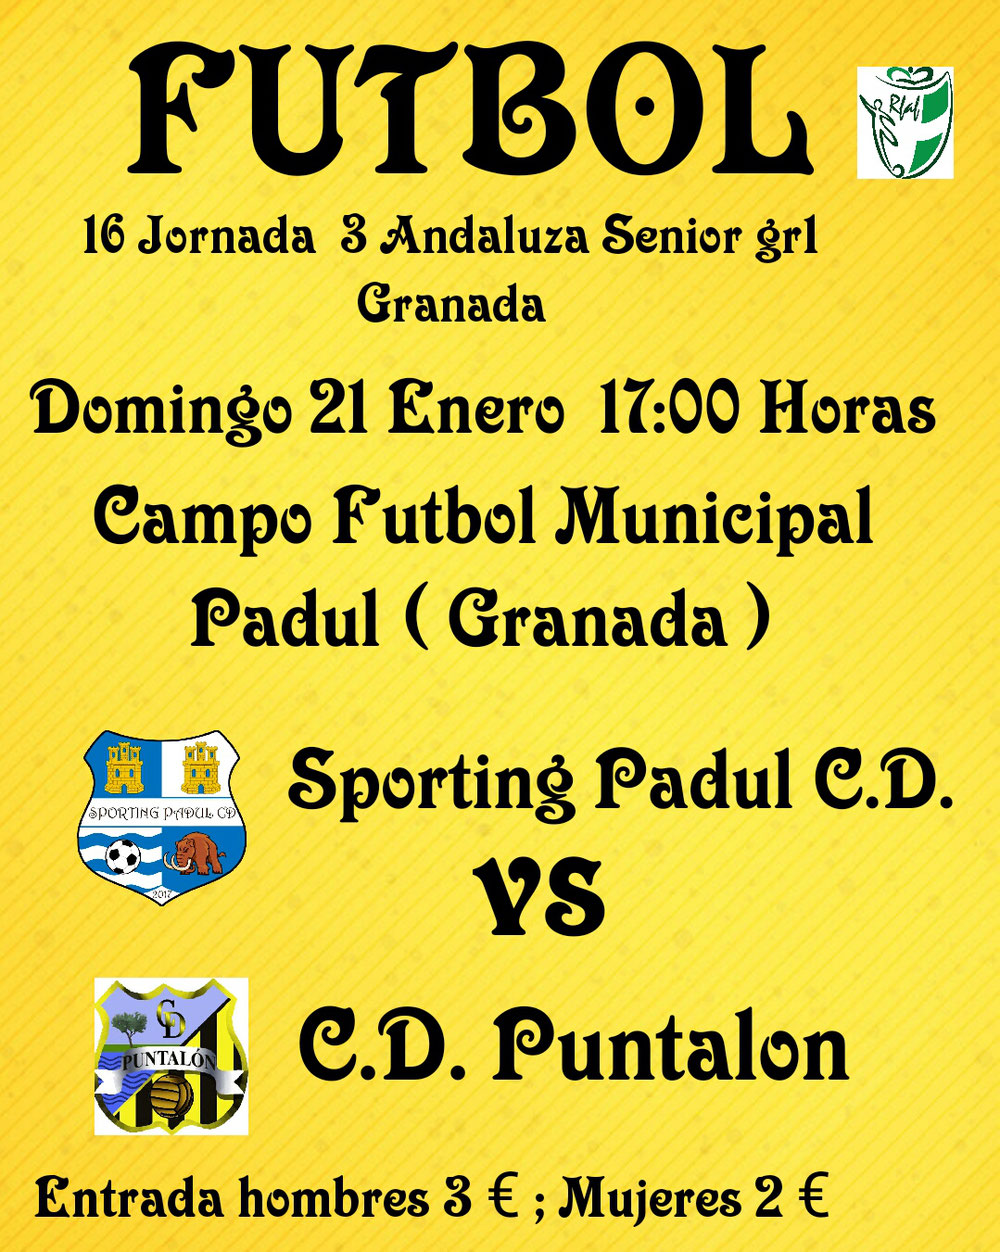 Sporting Padul CD vs CD Puntalon 